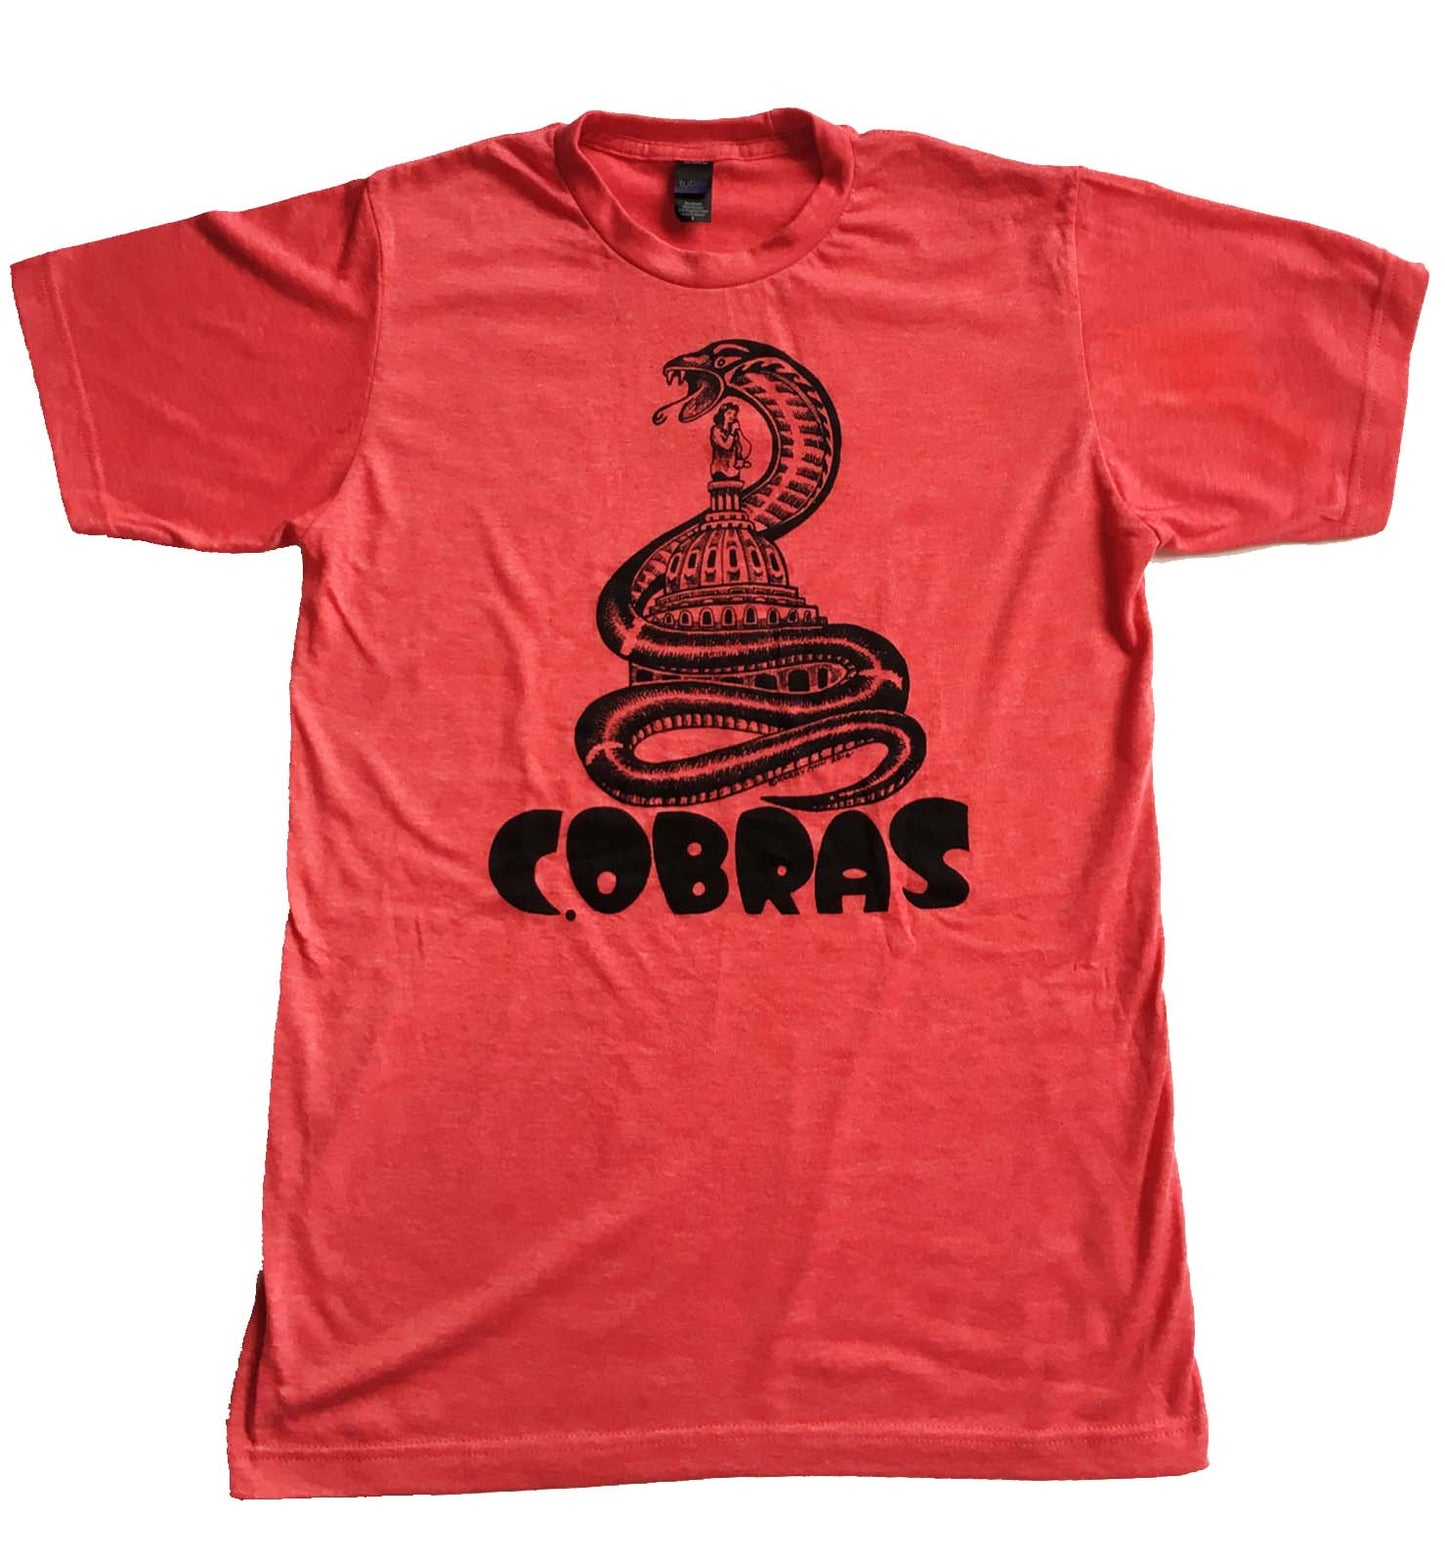 Men's Red Cobras Shirt